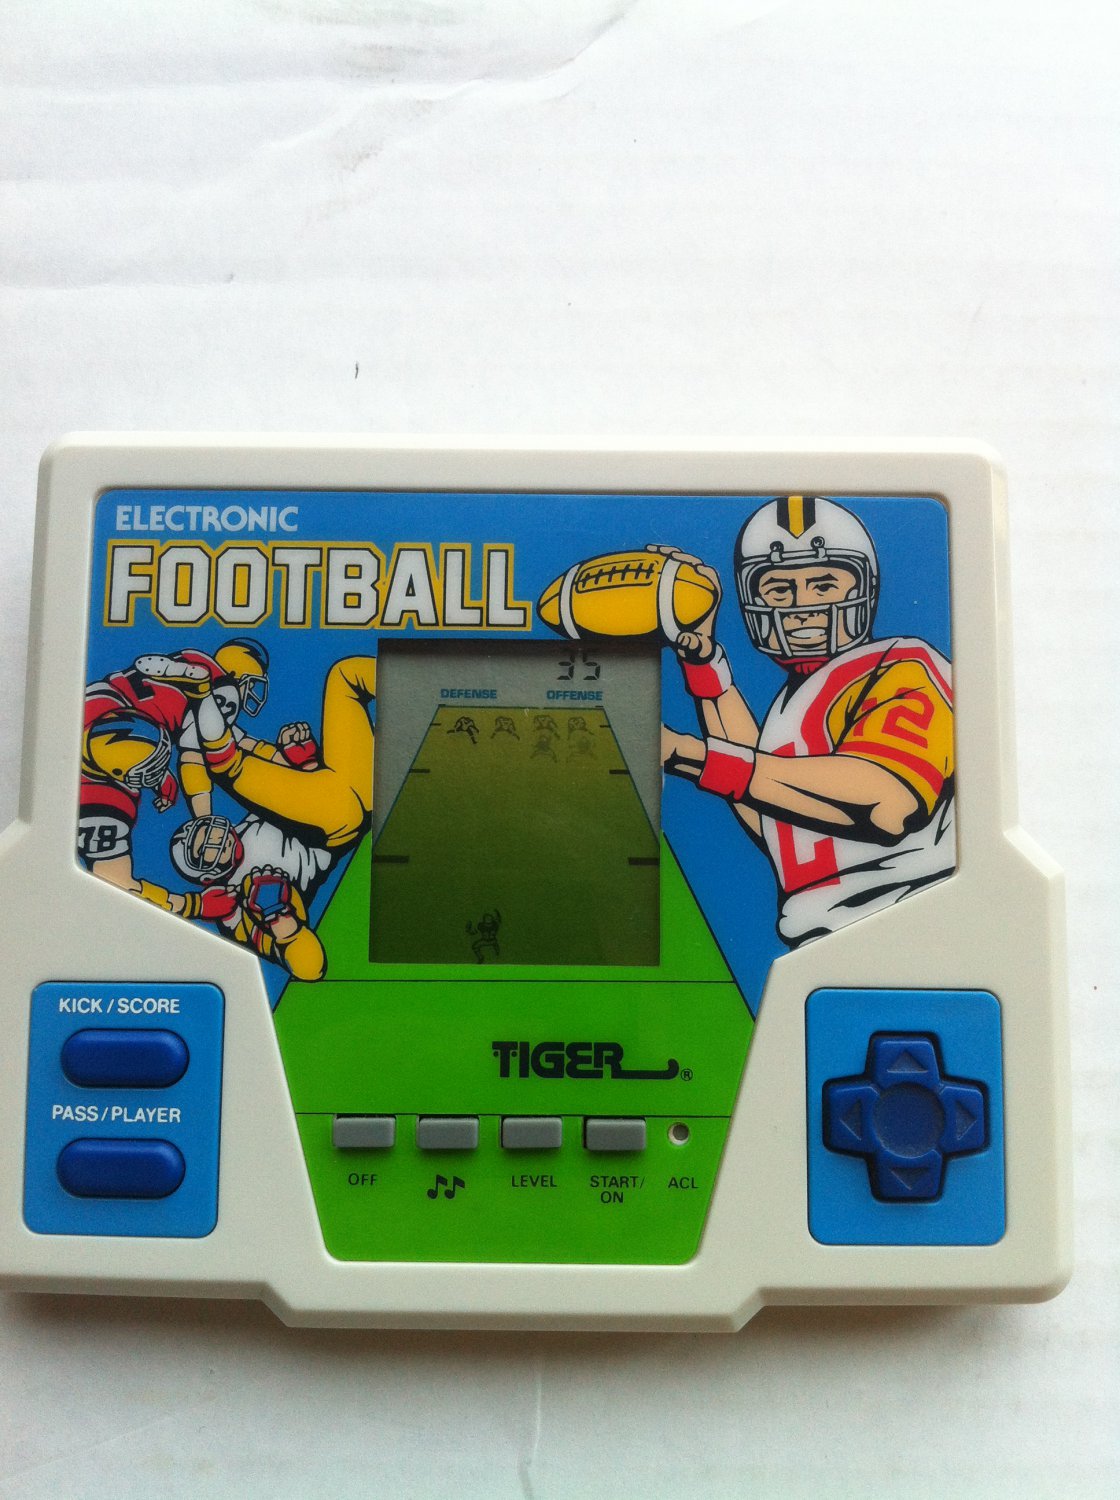 1980 handheld football game